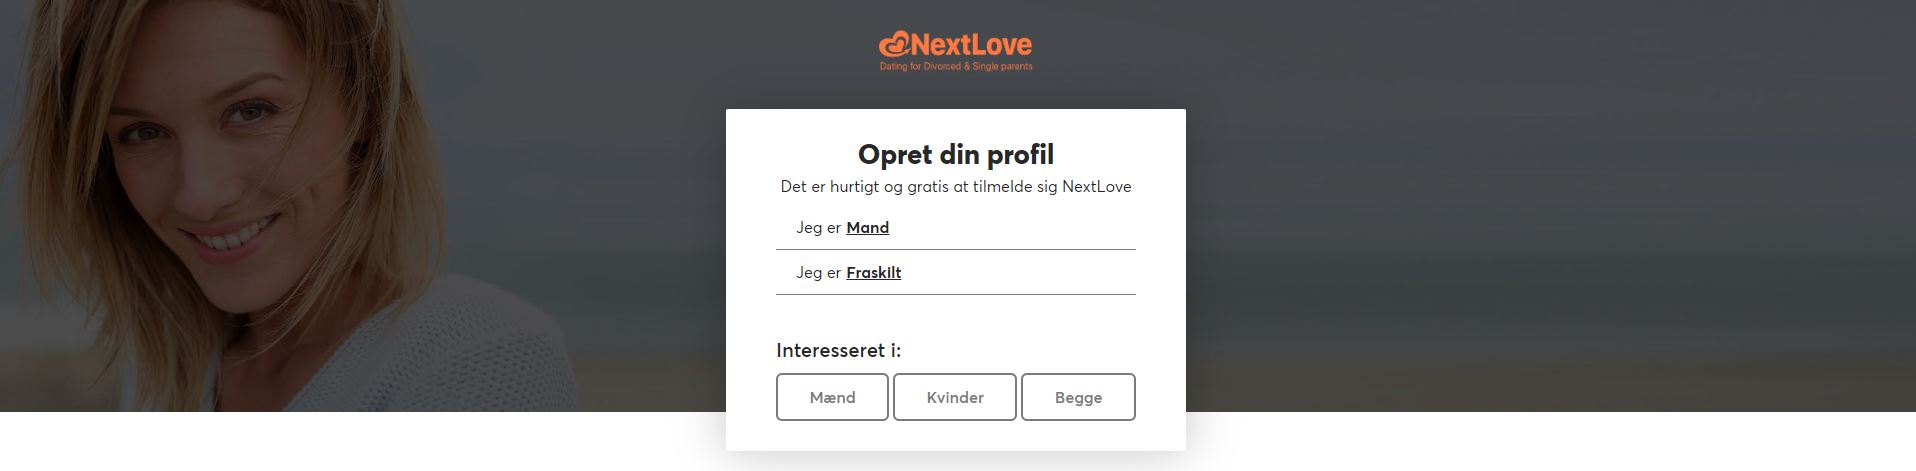 NextLove oprettelse